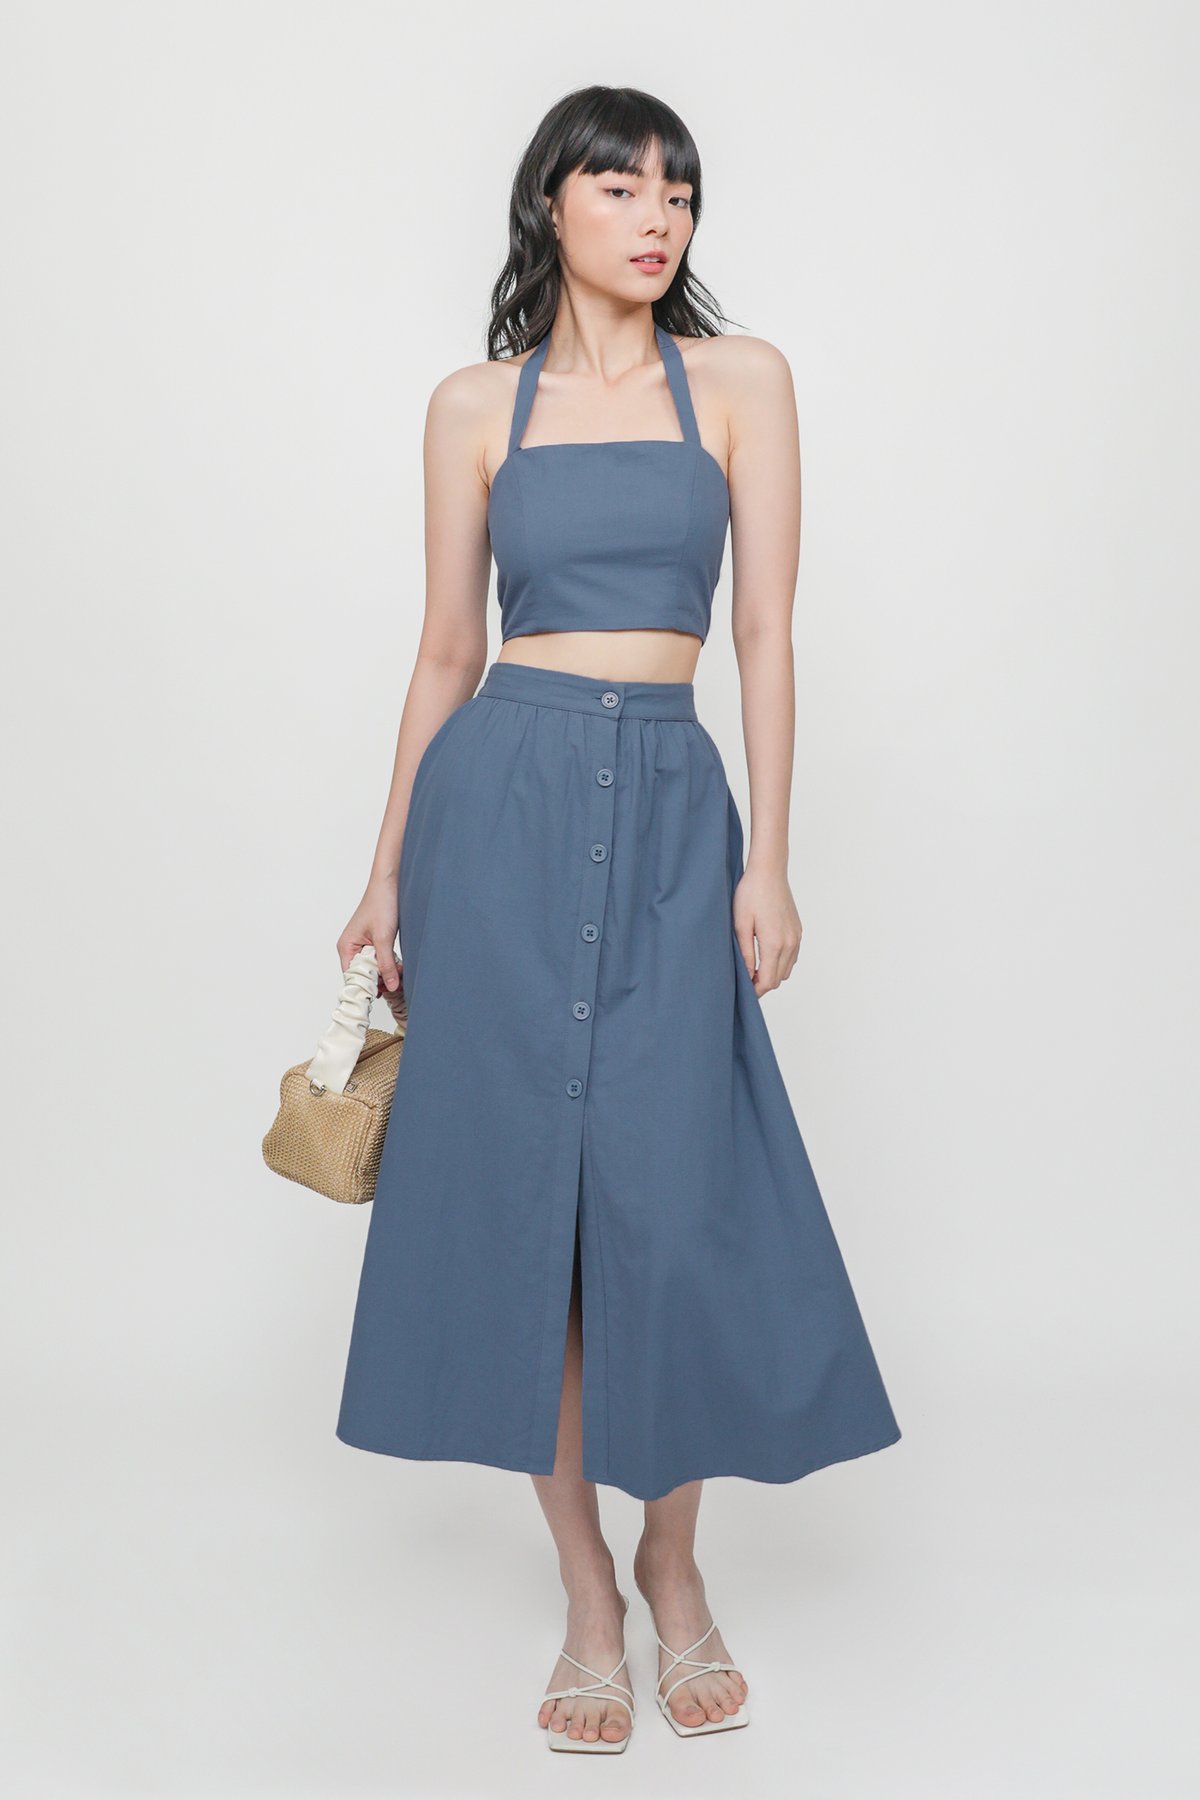 Agnes Button Midi Skirt (Steel Blue)